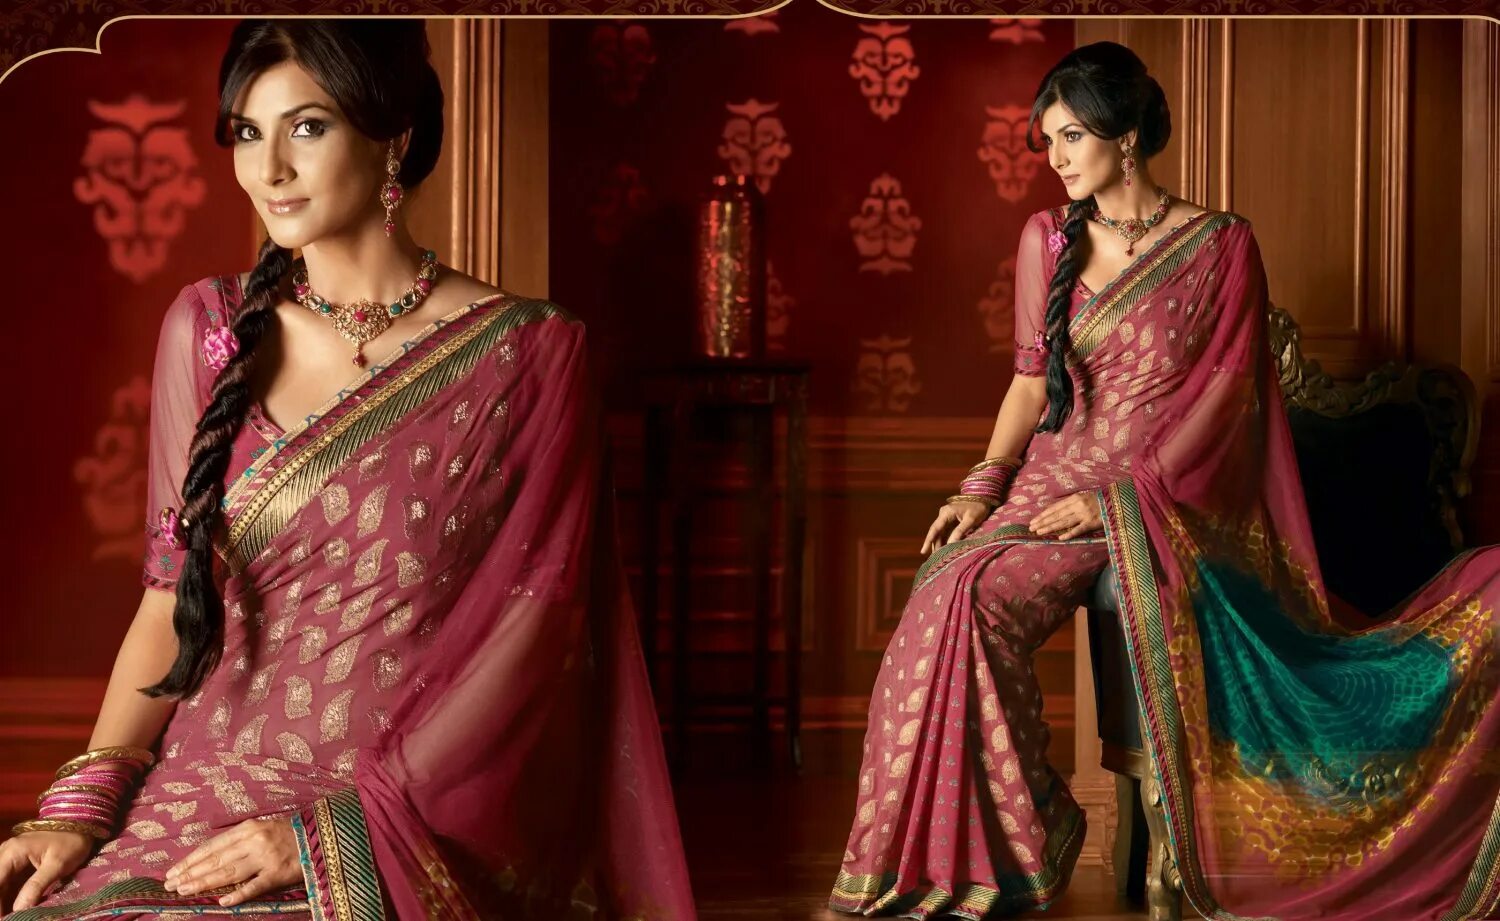 Сари индийская одежда. Сари (женская одежда в Индии). Индия женщины в Сари. Индийский костюм Сари.